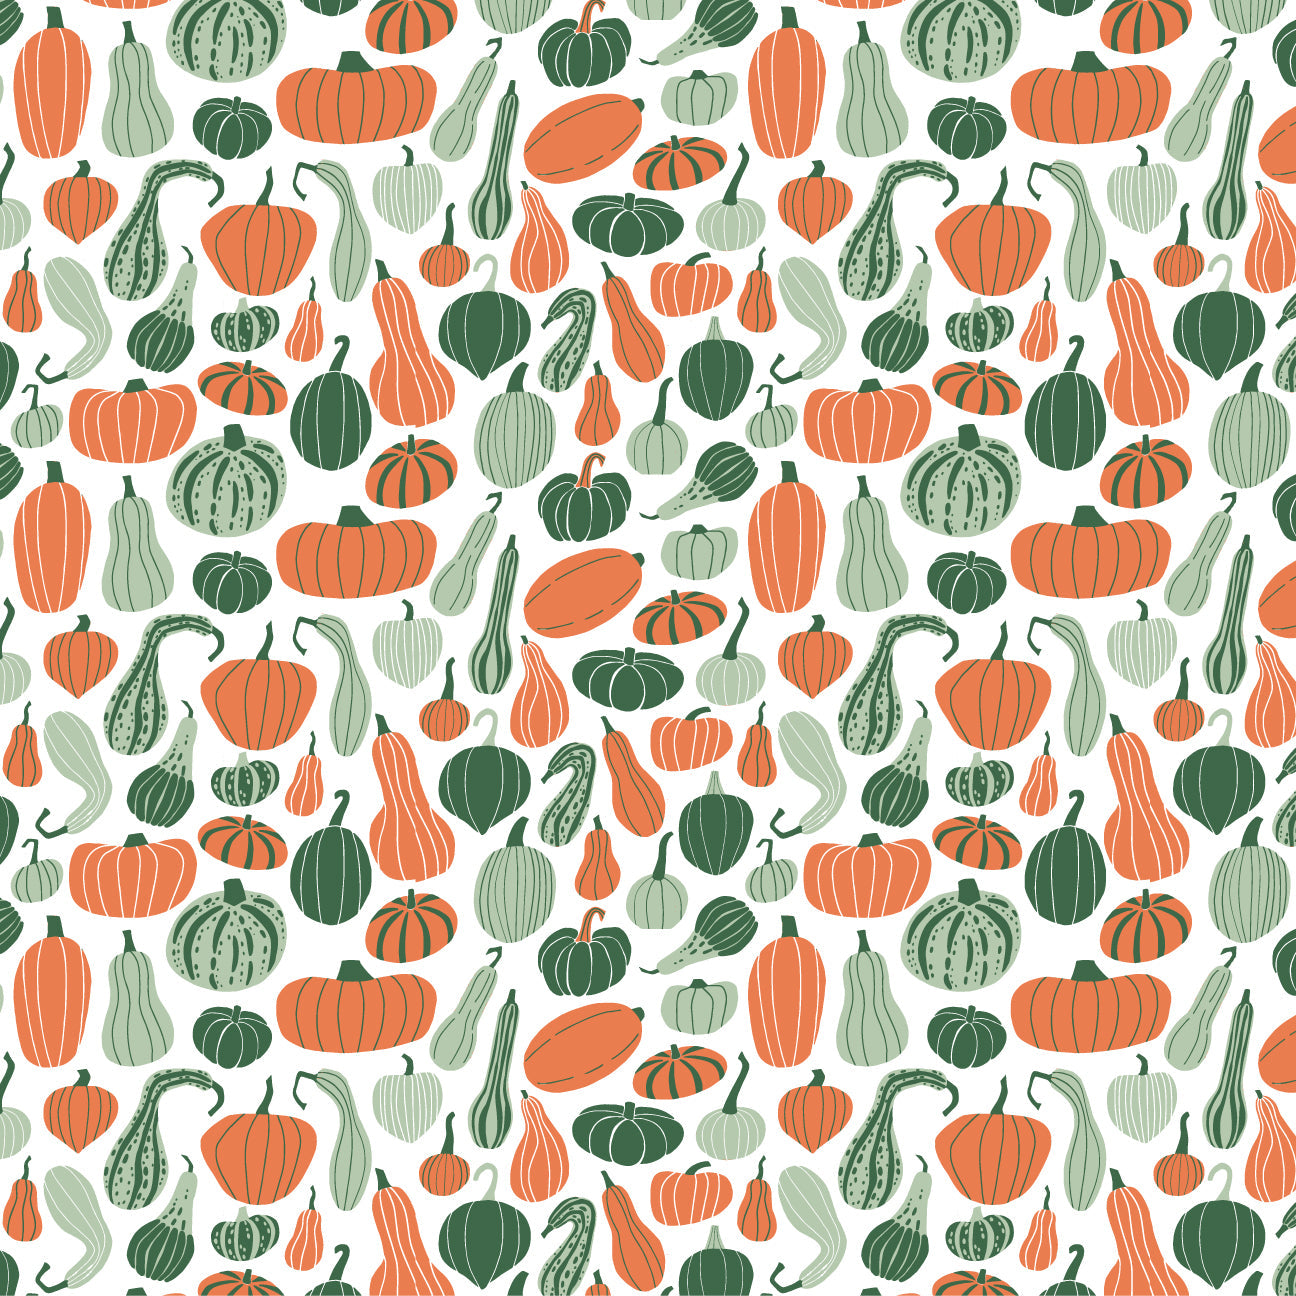 French Terry Jumpsuit - Gourds & Pumpkins Green & Orange